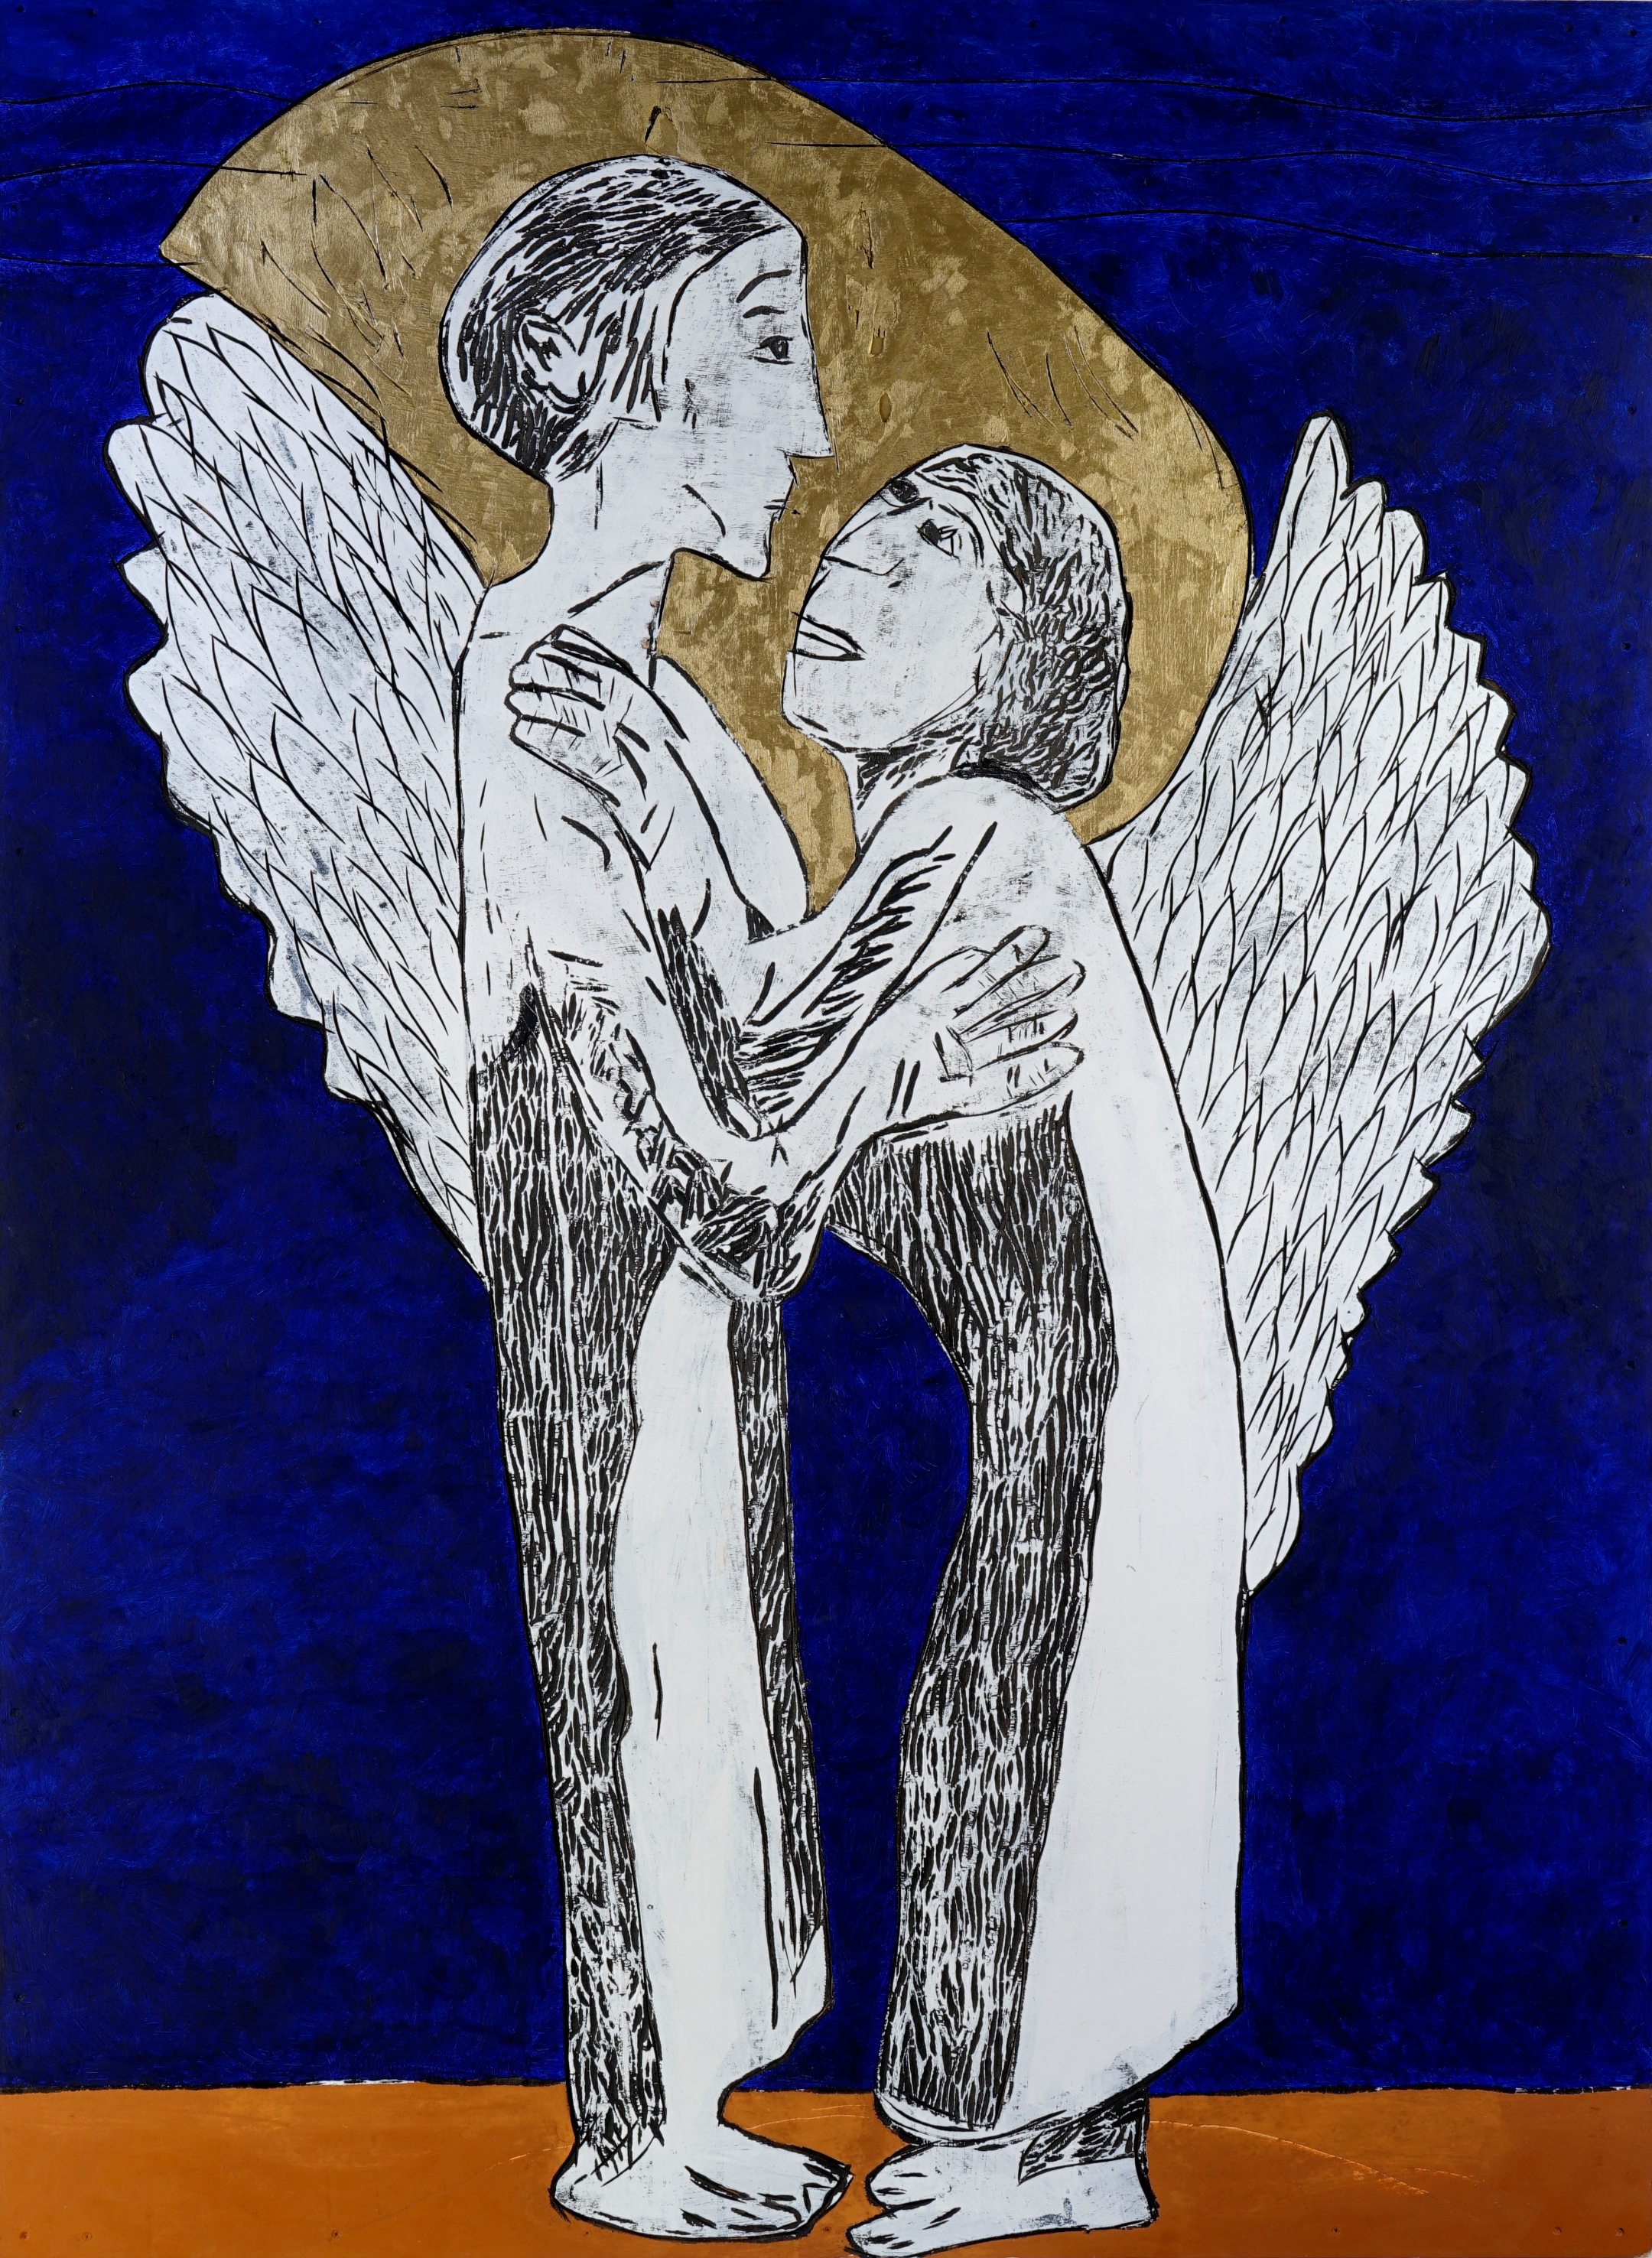 Jiri Keuthen: Two angels meet again